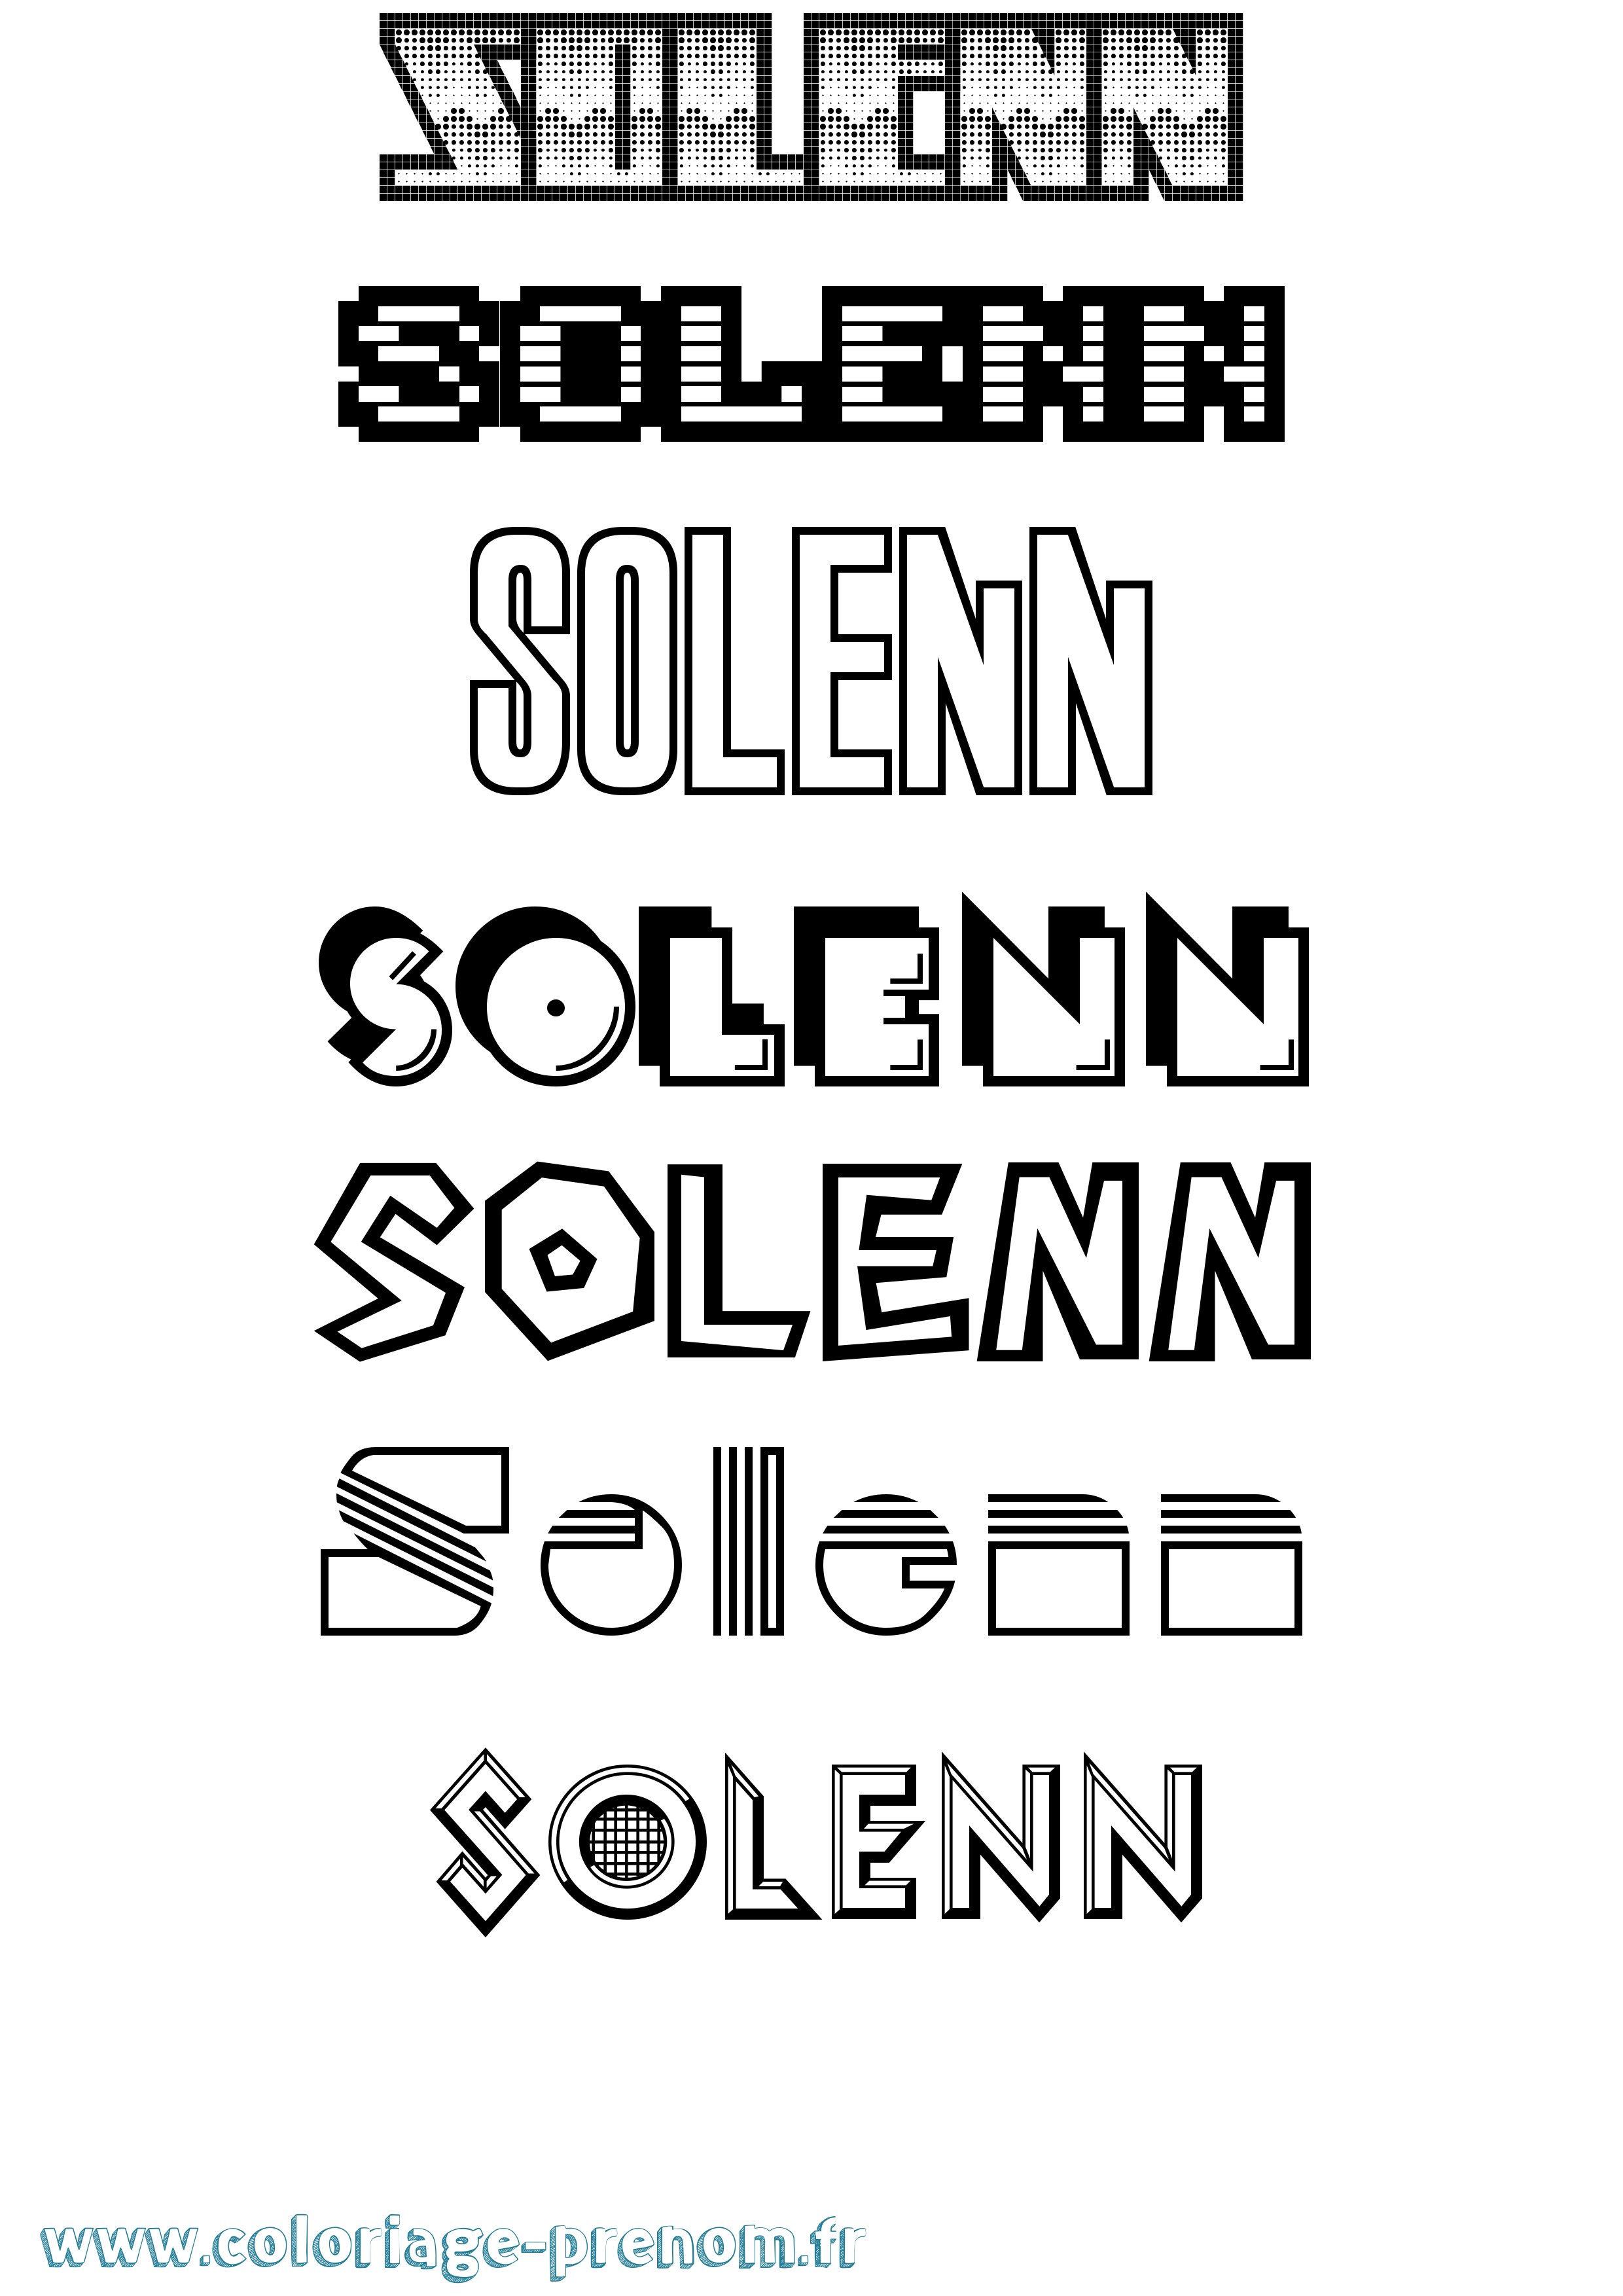 Coloriage prénom Solenn